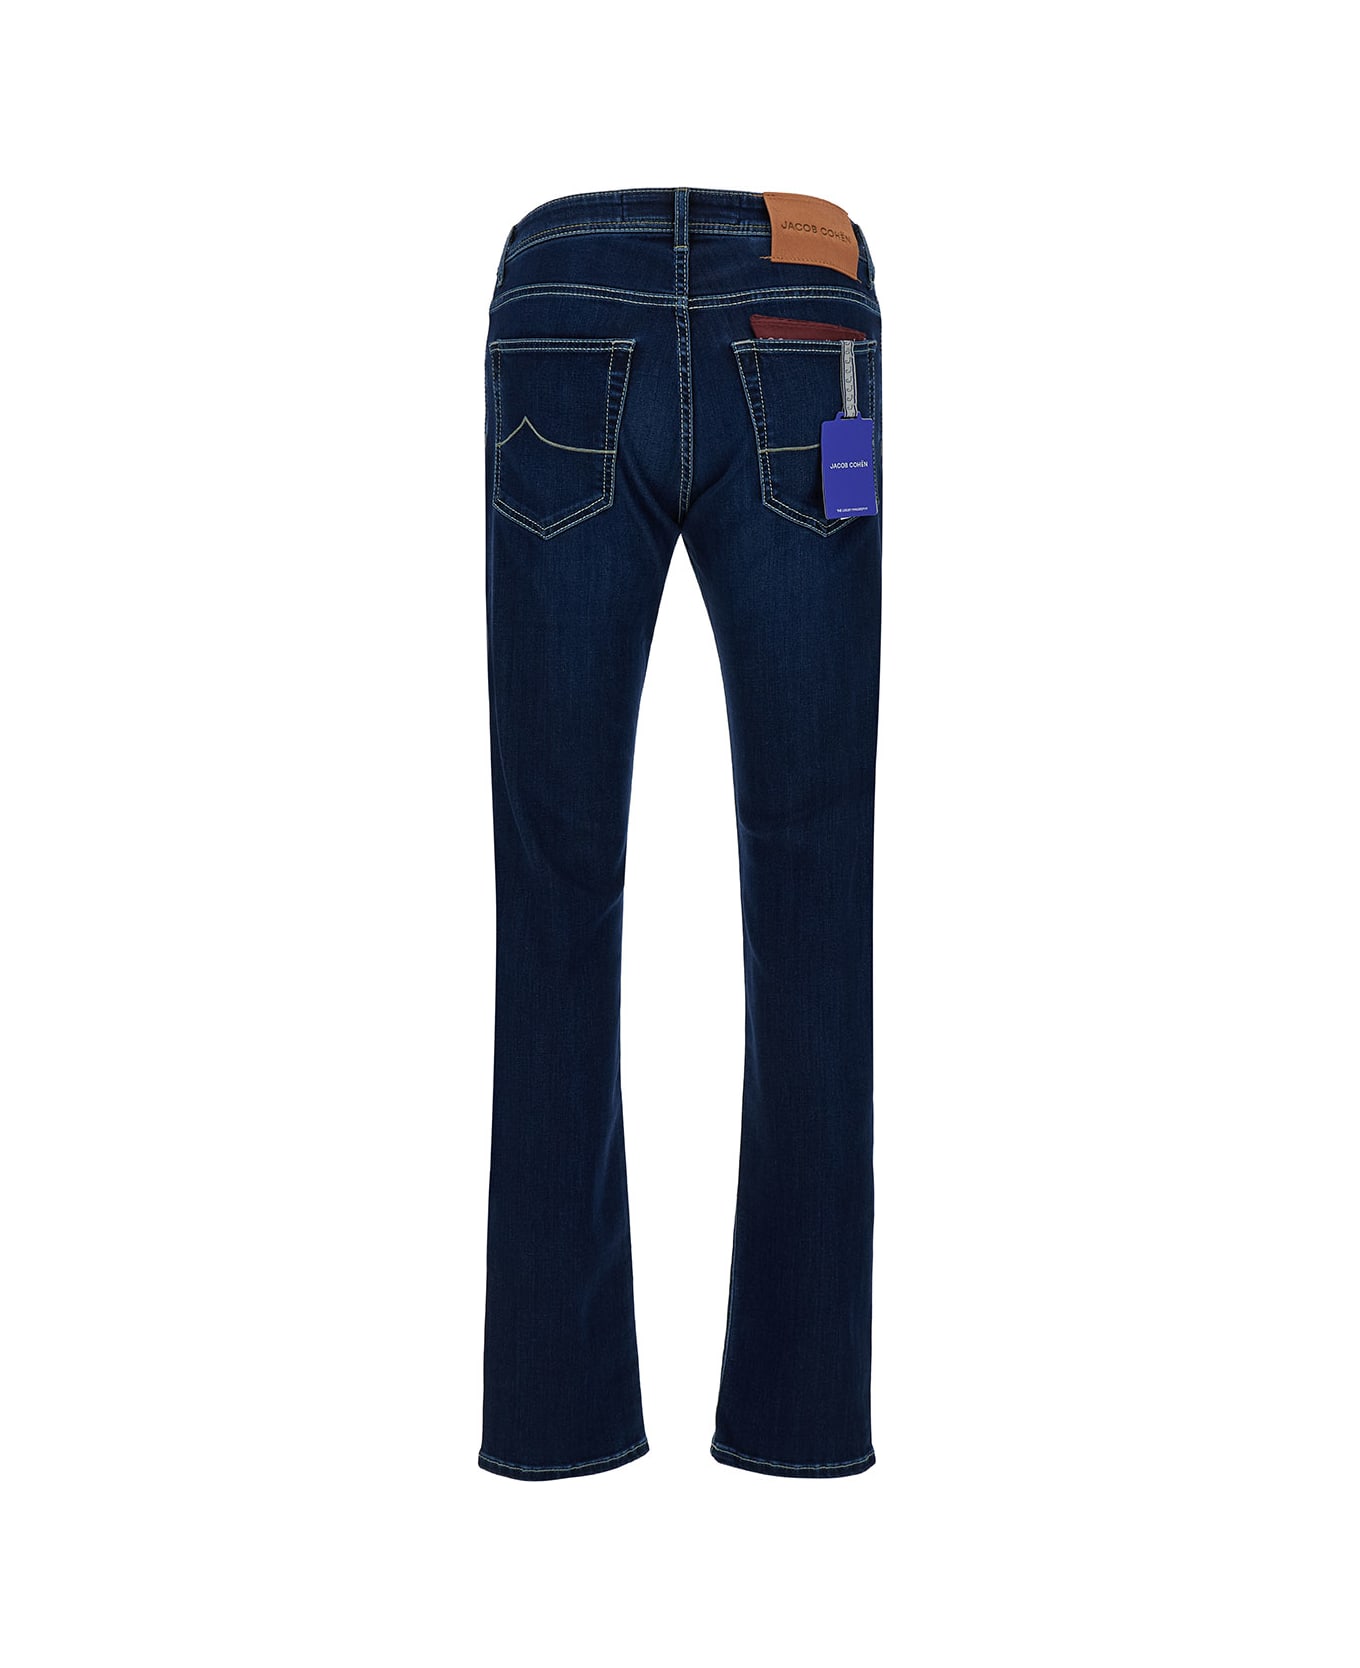 Jacob Cohen Low Waist Blue Slim Jeans In Cotton Blend Man - Blu デニム